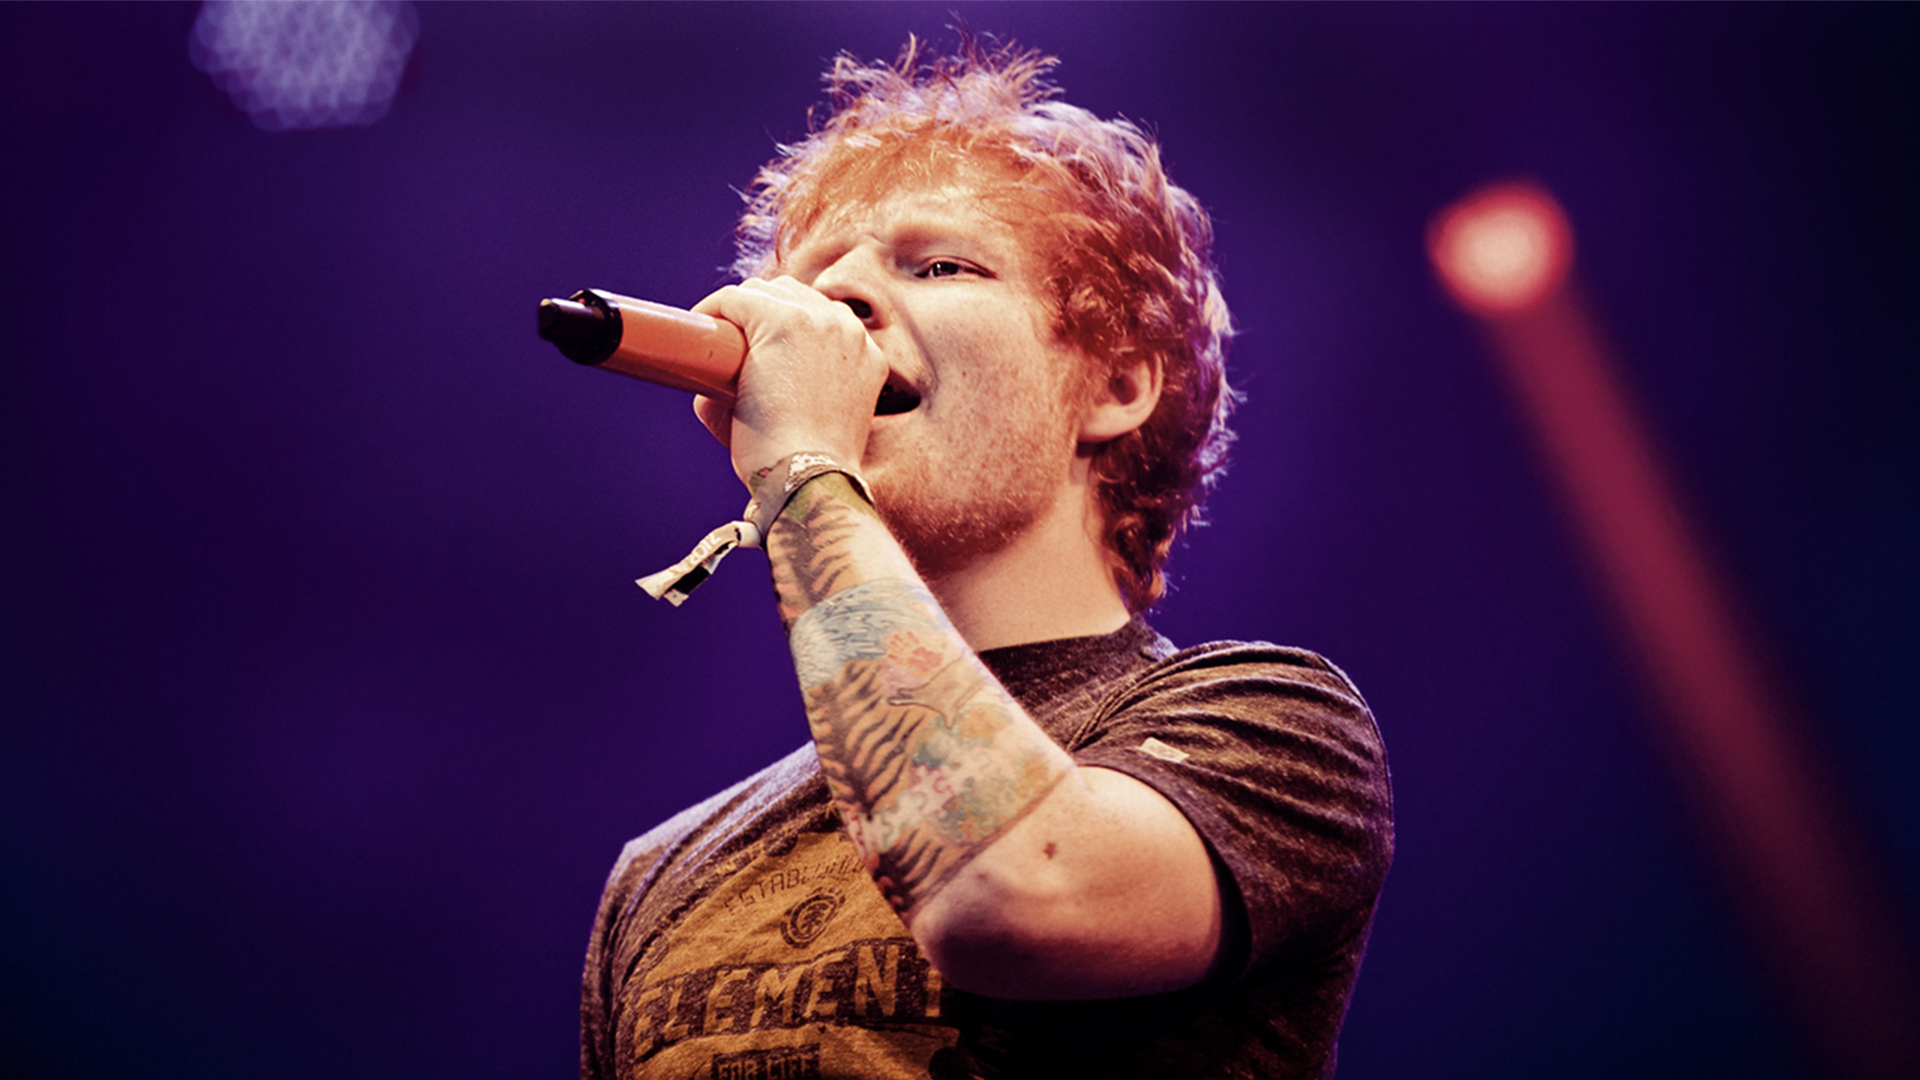 Ed Sheeran singing into a microphone